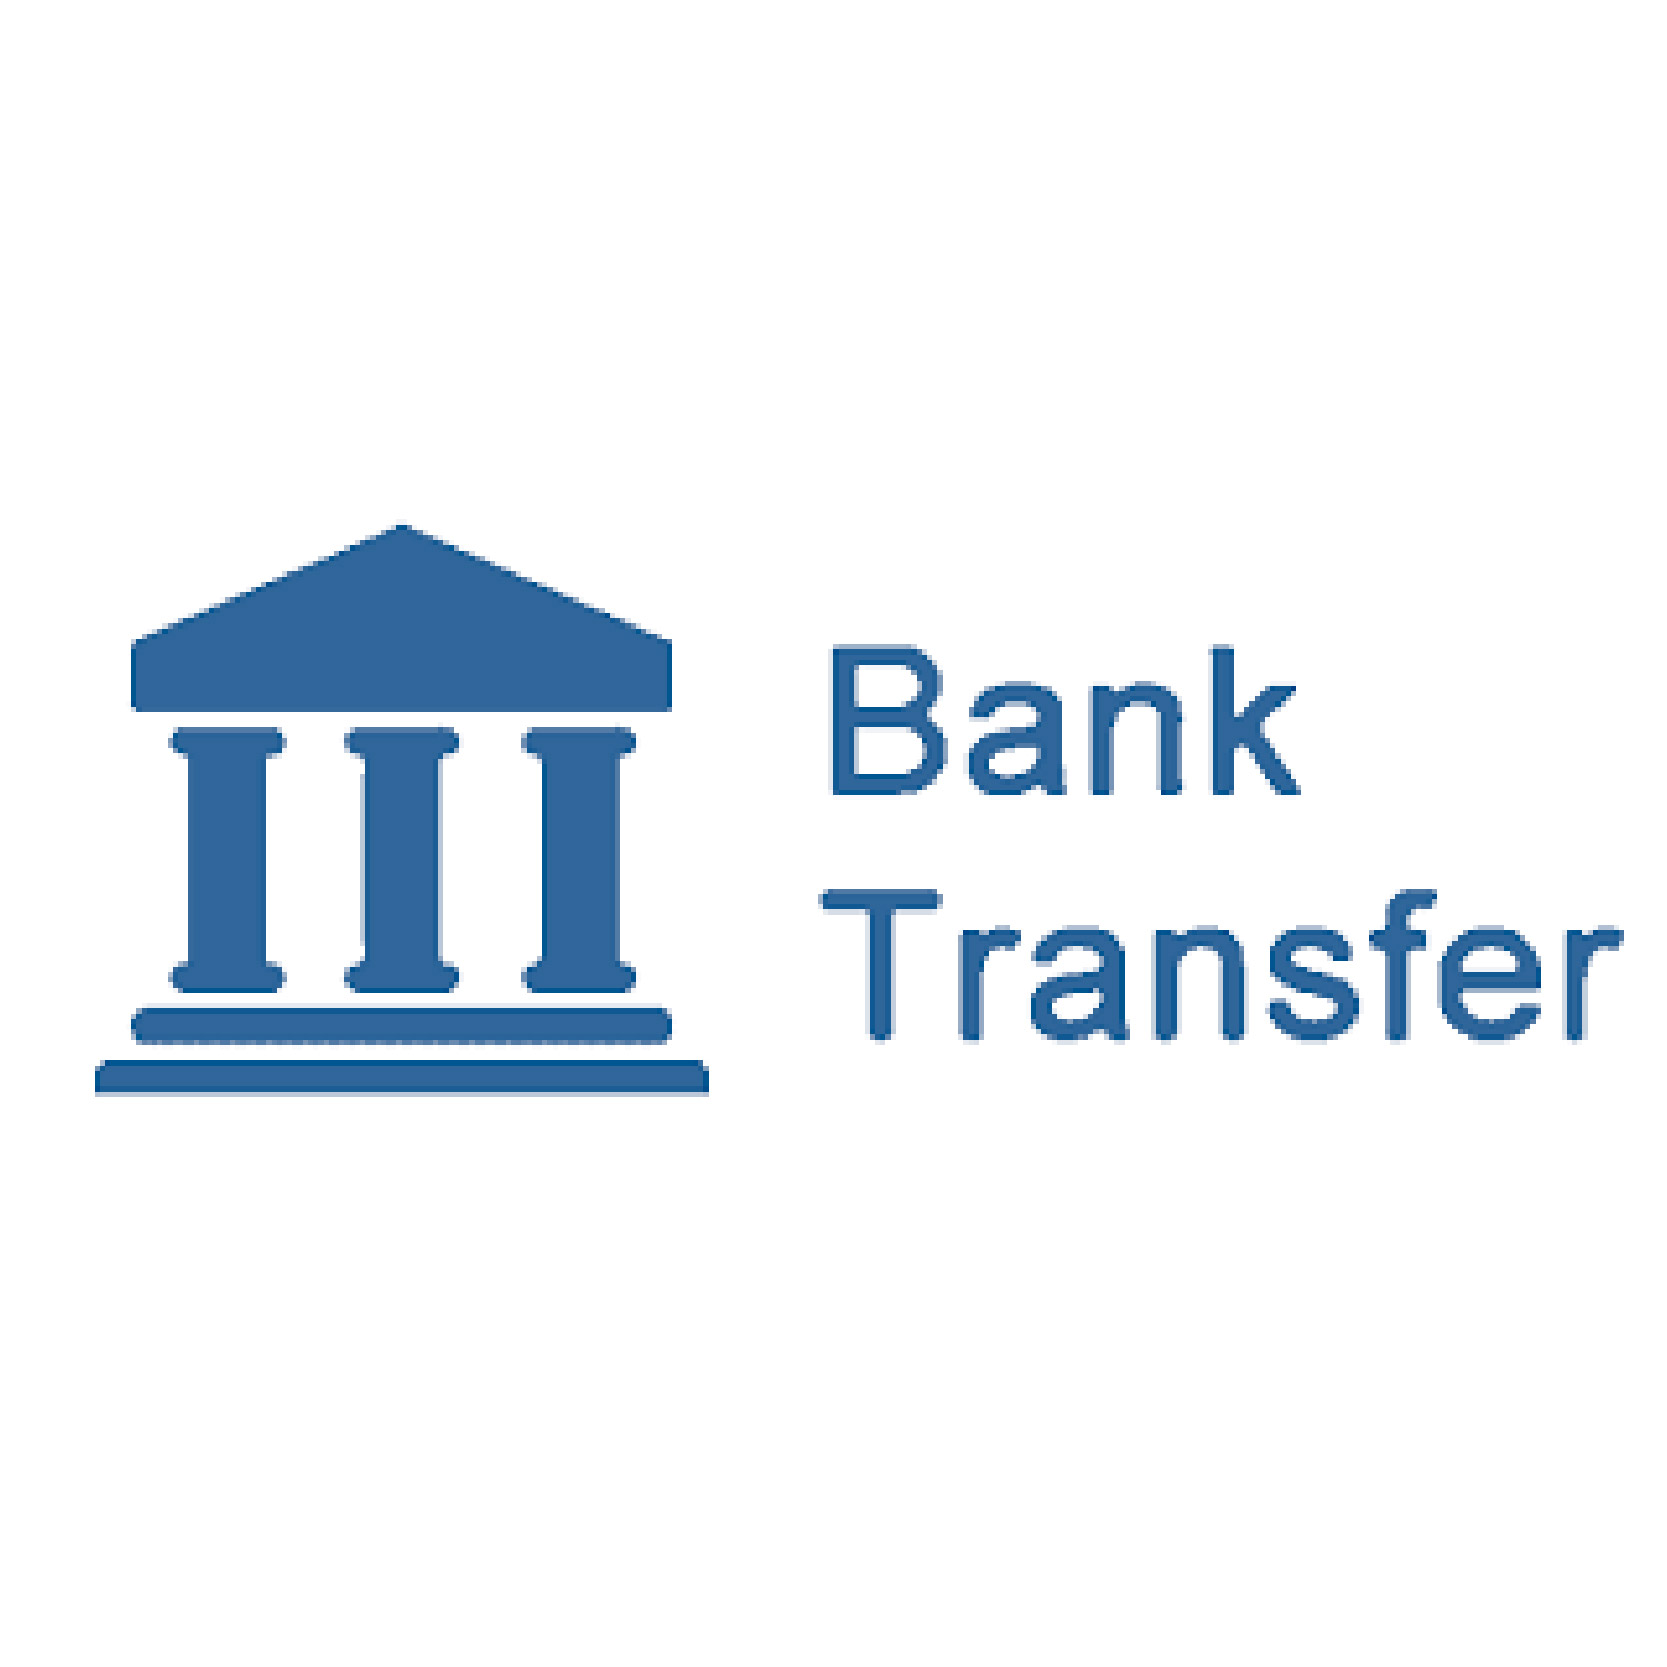 Bank transfer-01